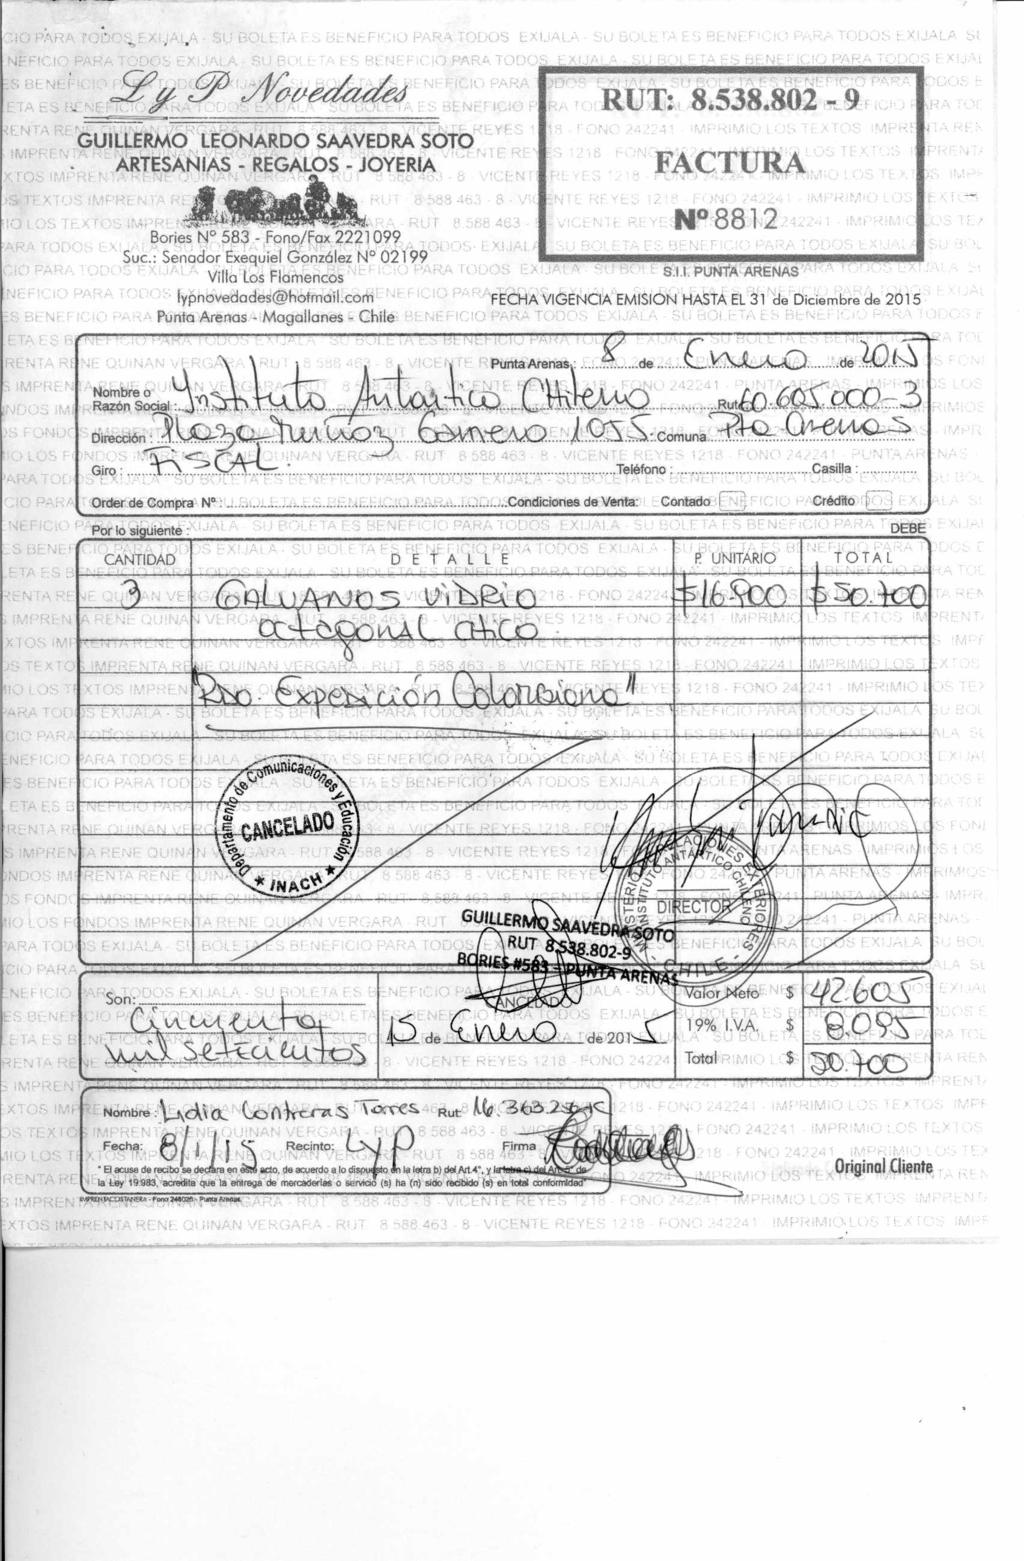 g y embleaccied RUT: 8.538.802-9 GUILLERMO LEONARDO SAAVEDRA SOTO ARTESANIAS - REGALOS - JOYERIA Bories N 583 - Fono/Fax 2221099 Suc.